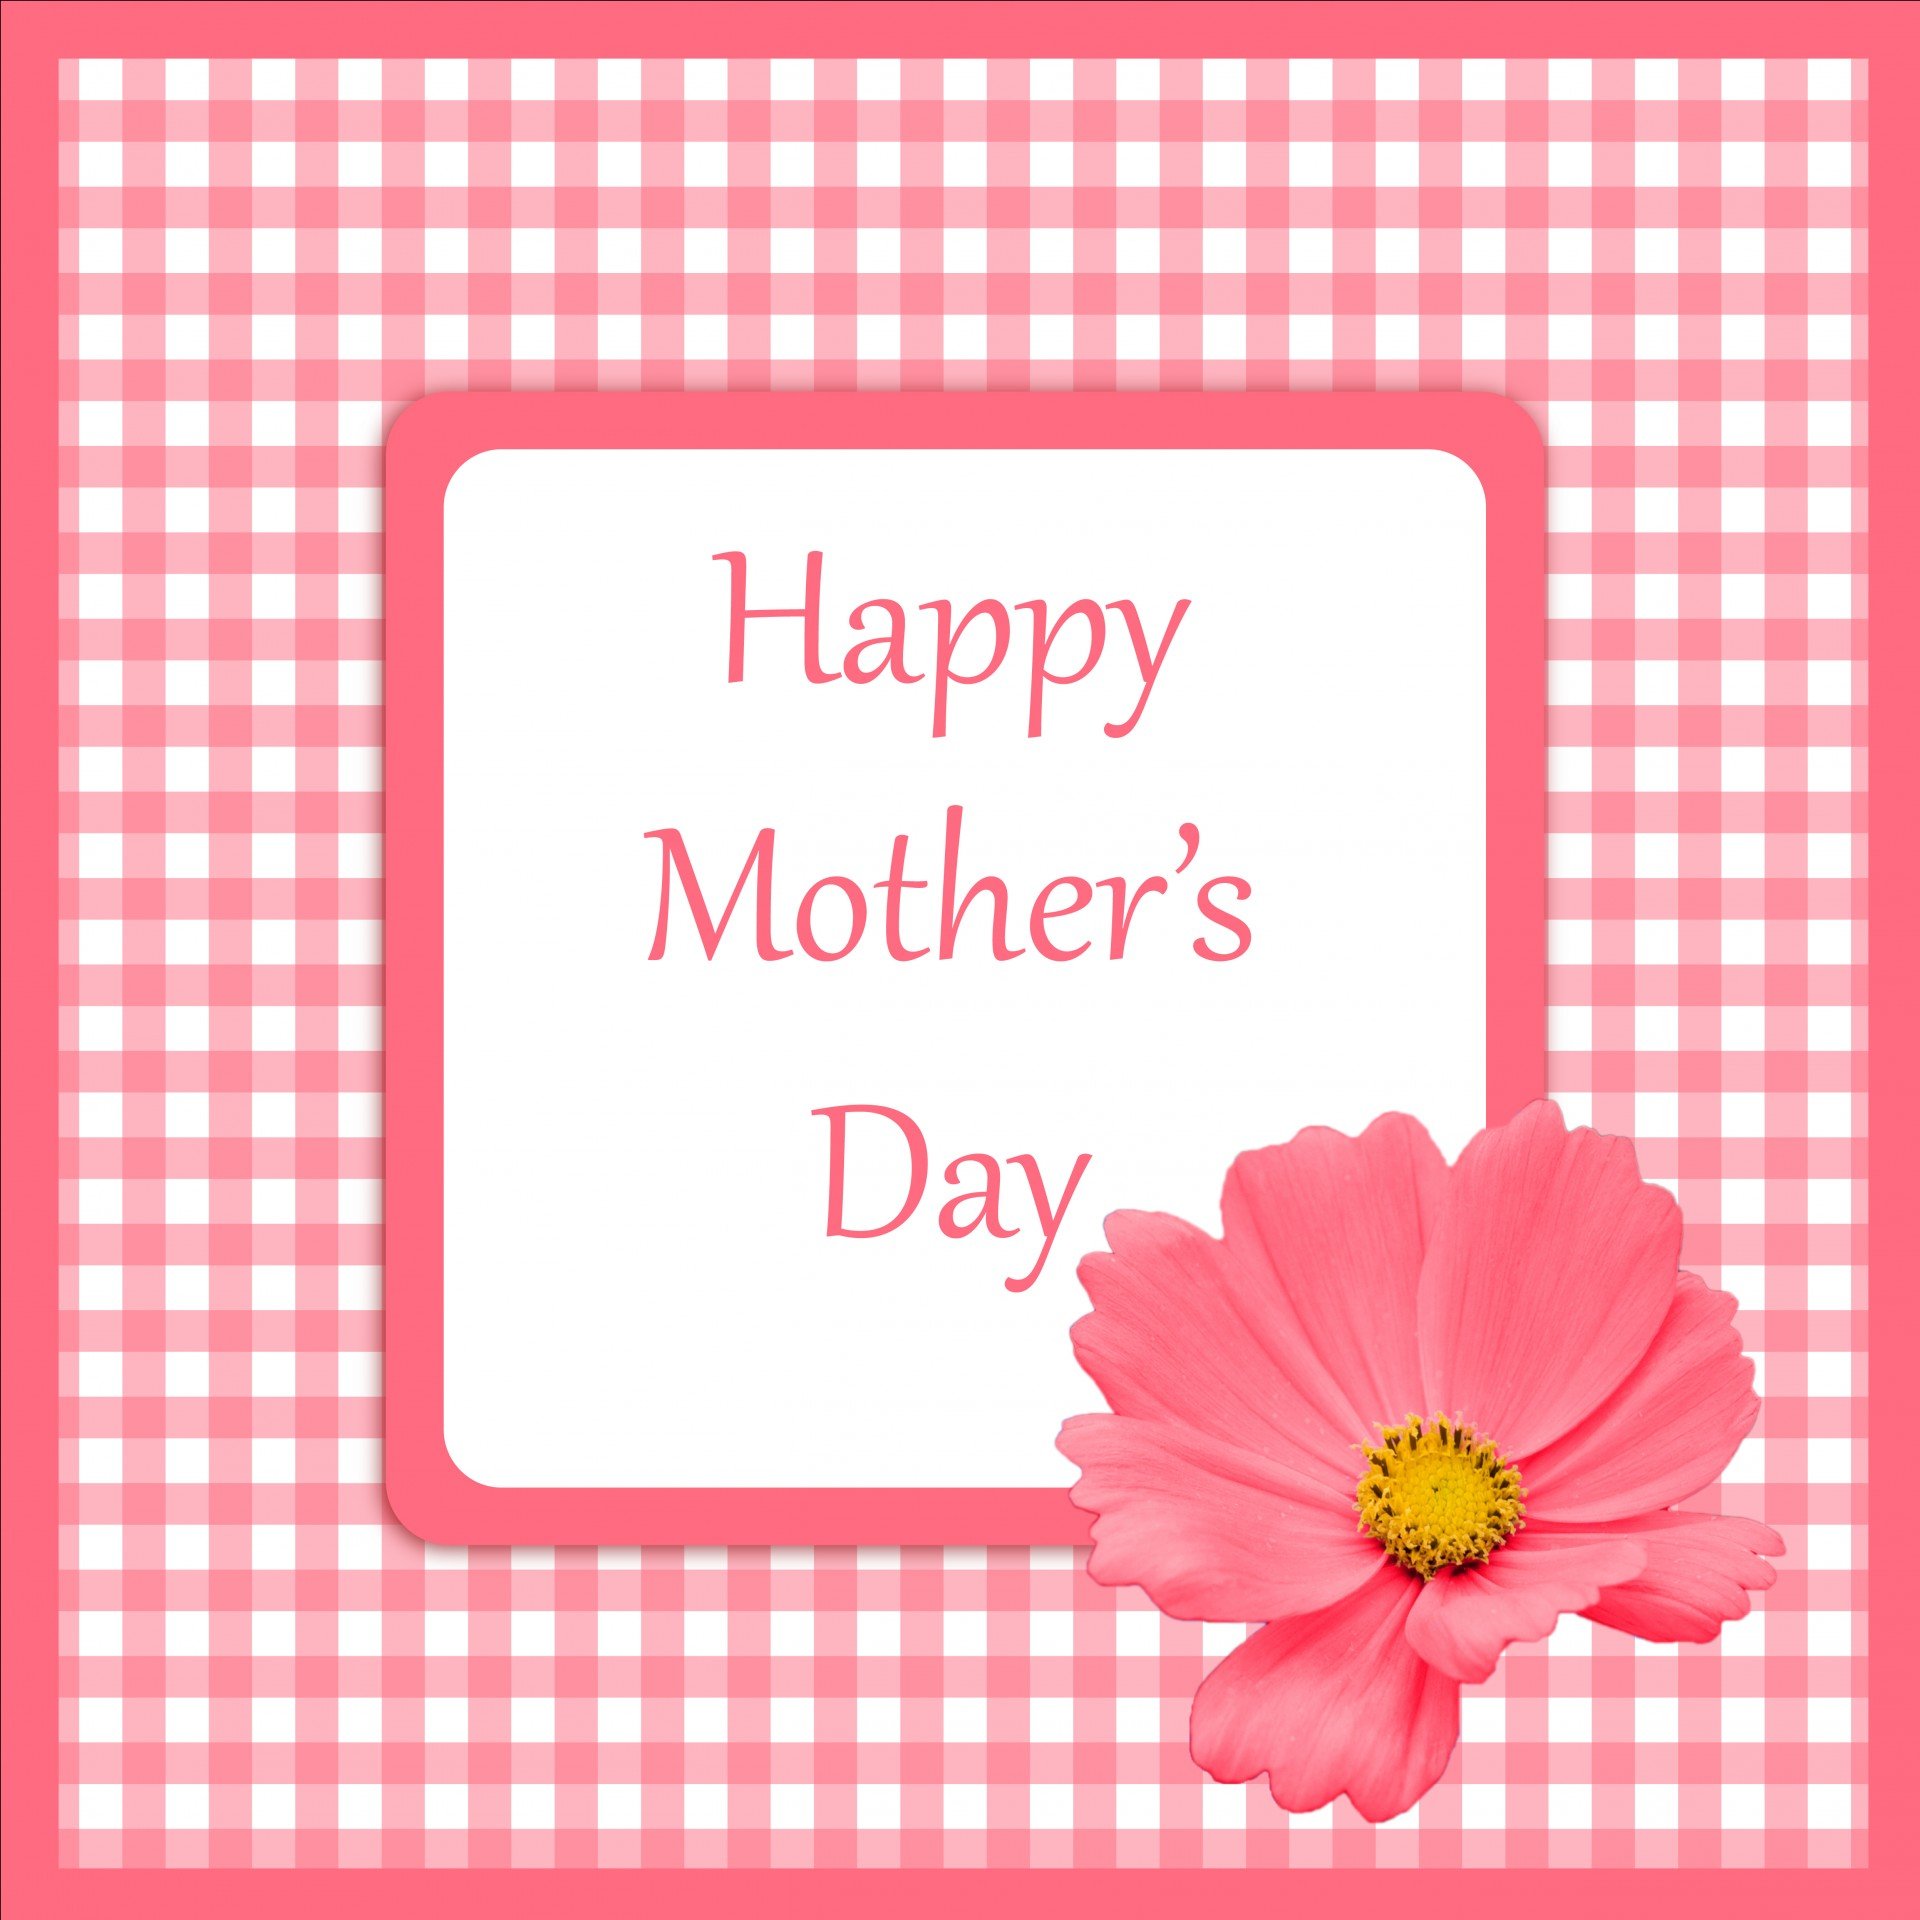 Открытка маме на день матери. Открытки с днём матери. Открытка для мамы. Mother's Day открытка. Happy mothers Day открытки.